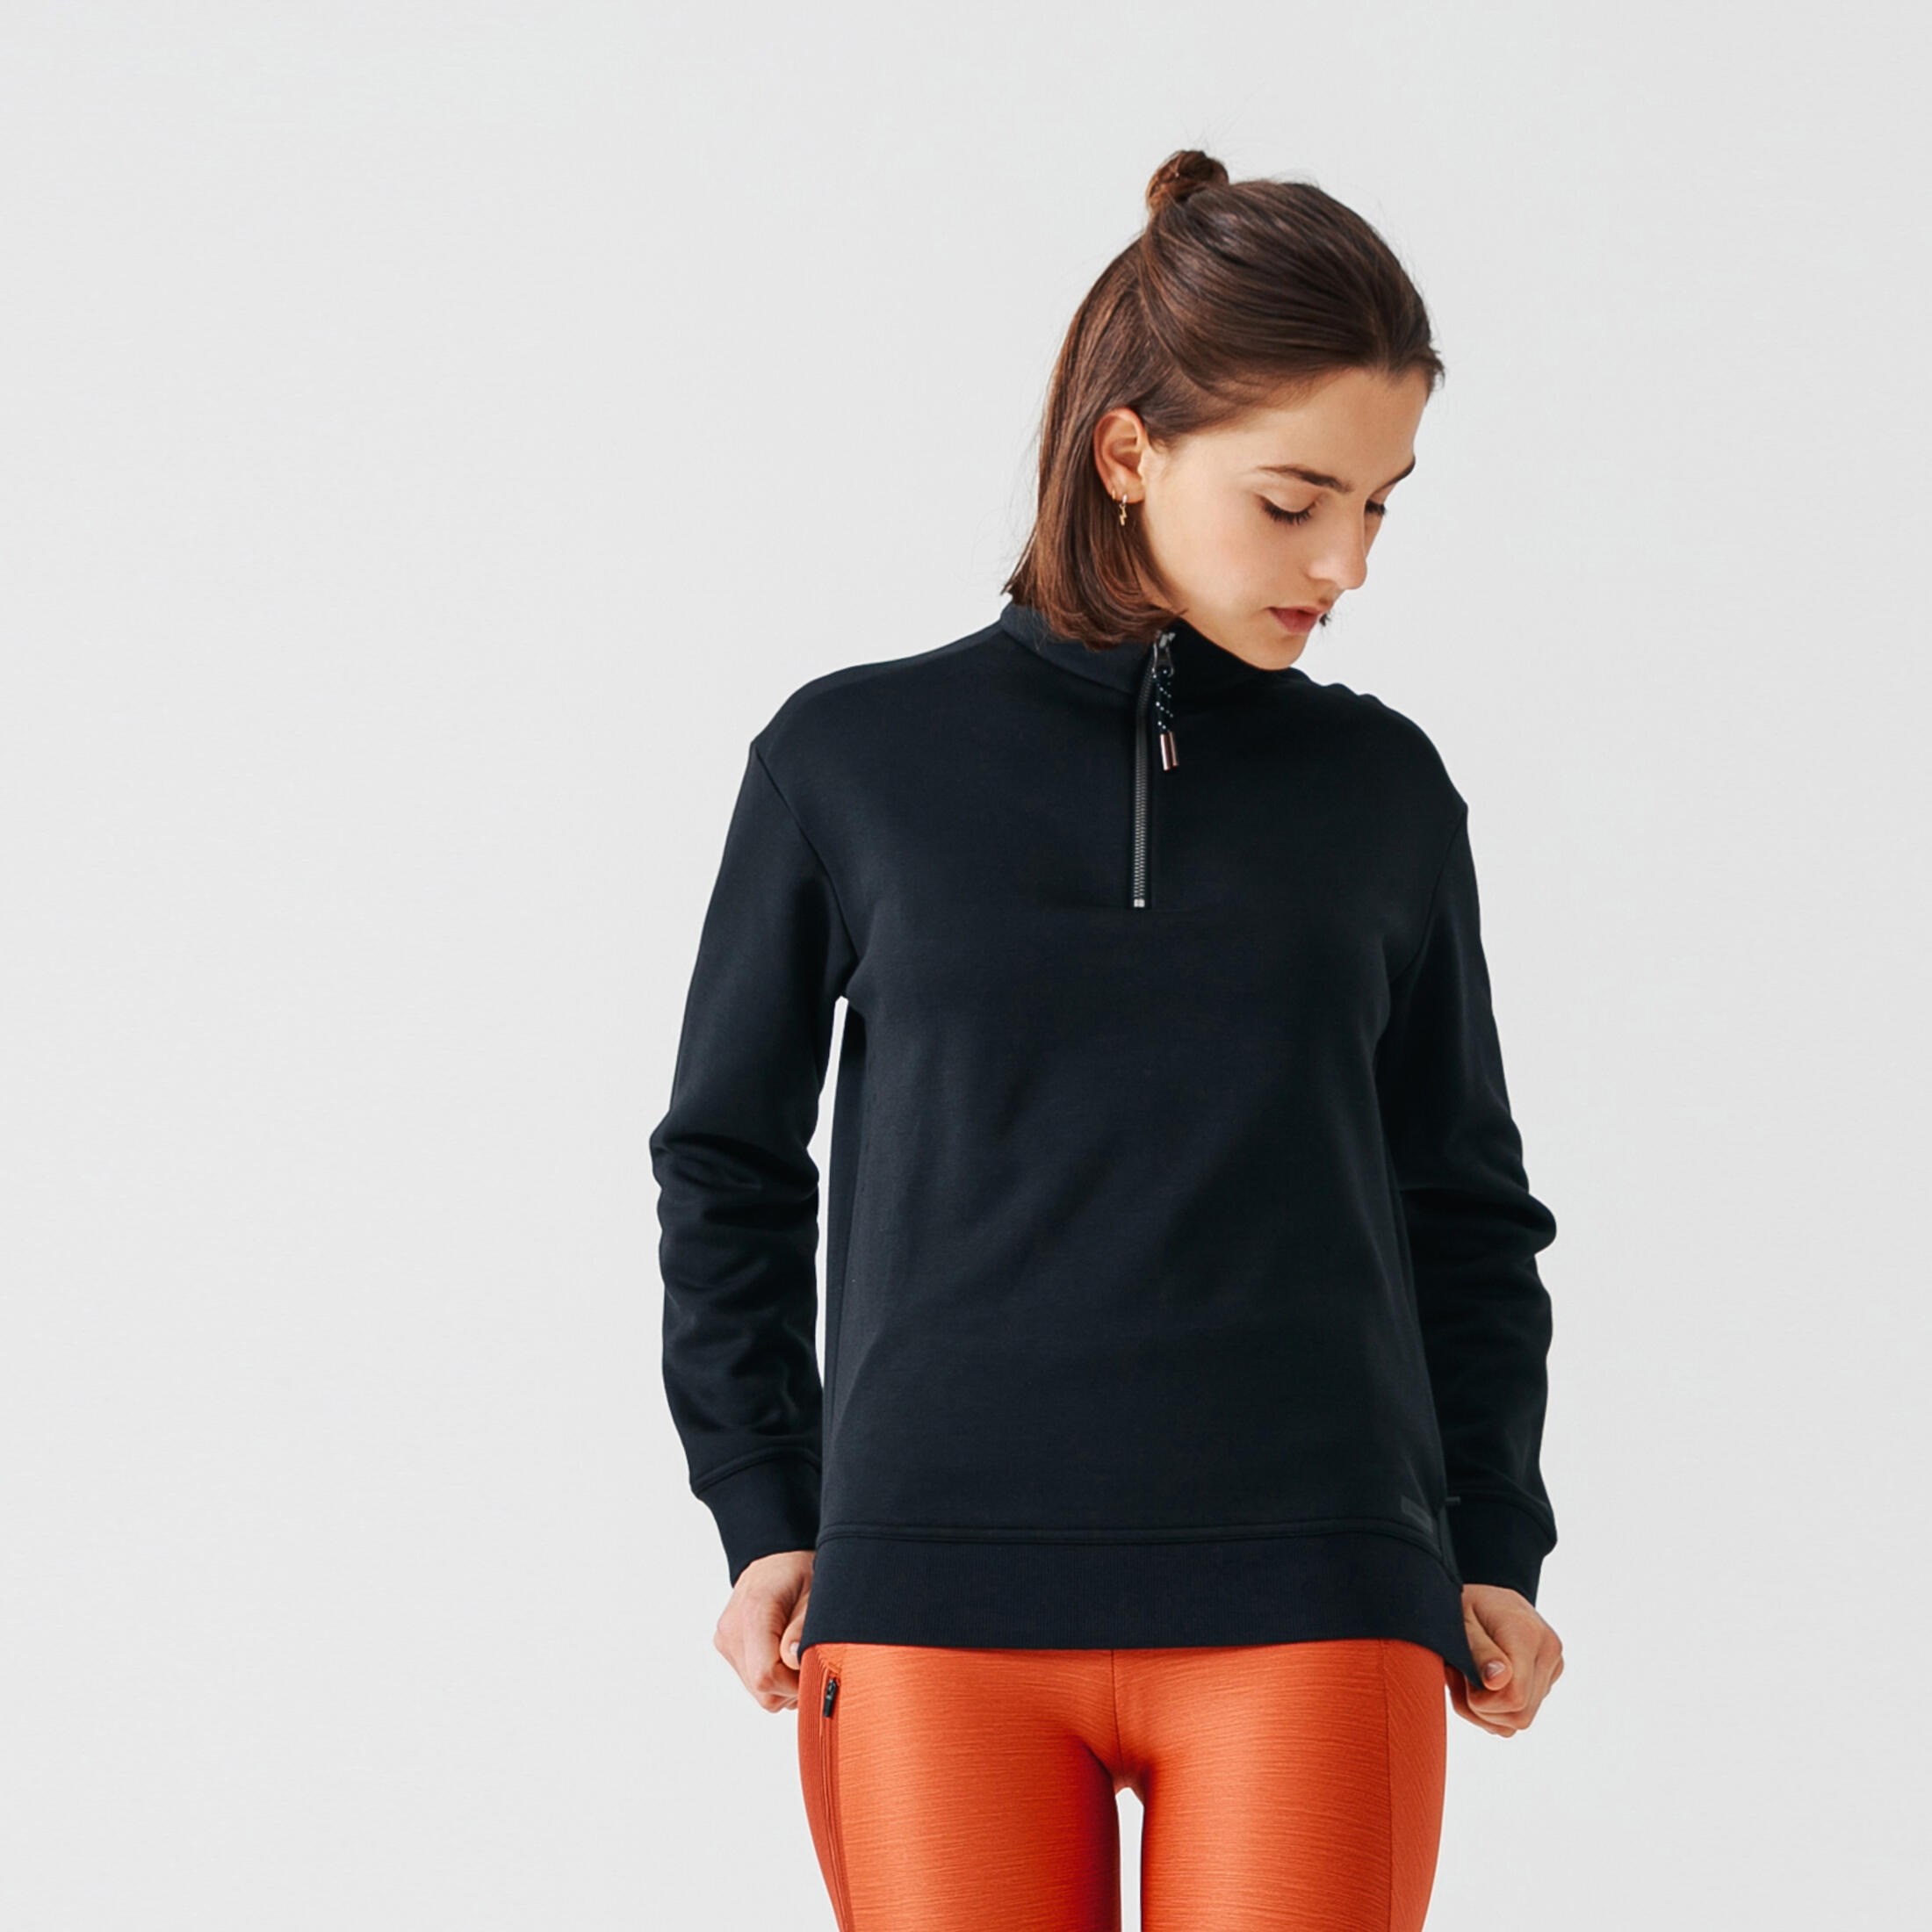 KALENJI Women's Running Warm Zip Collar Sweatshirt Warm+ - black